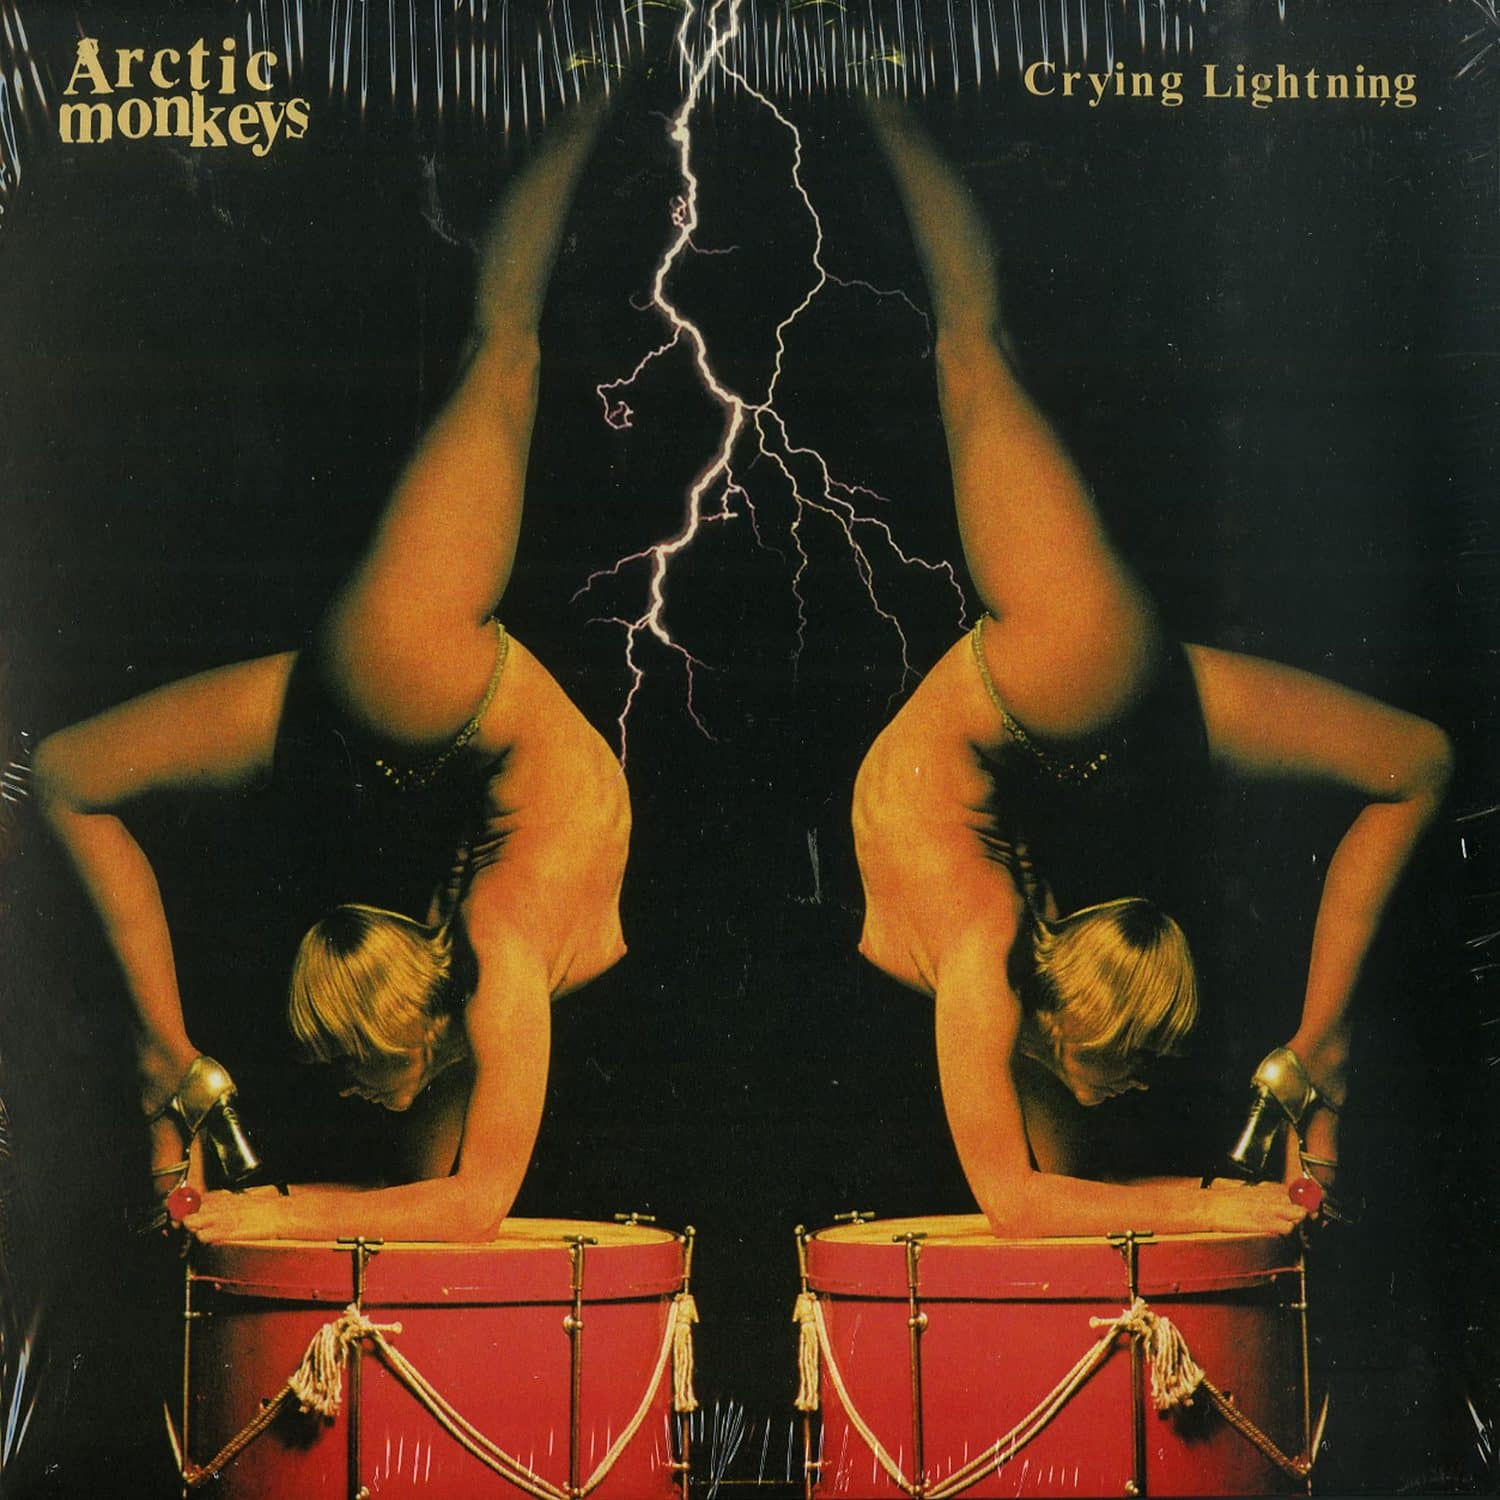 Arctic Monkeys - CRYING LIGHTNING 